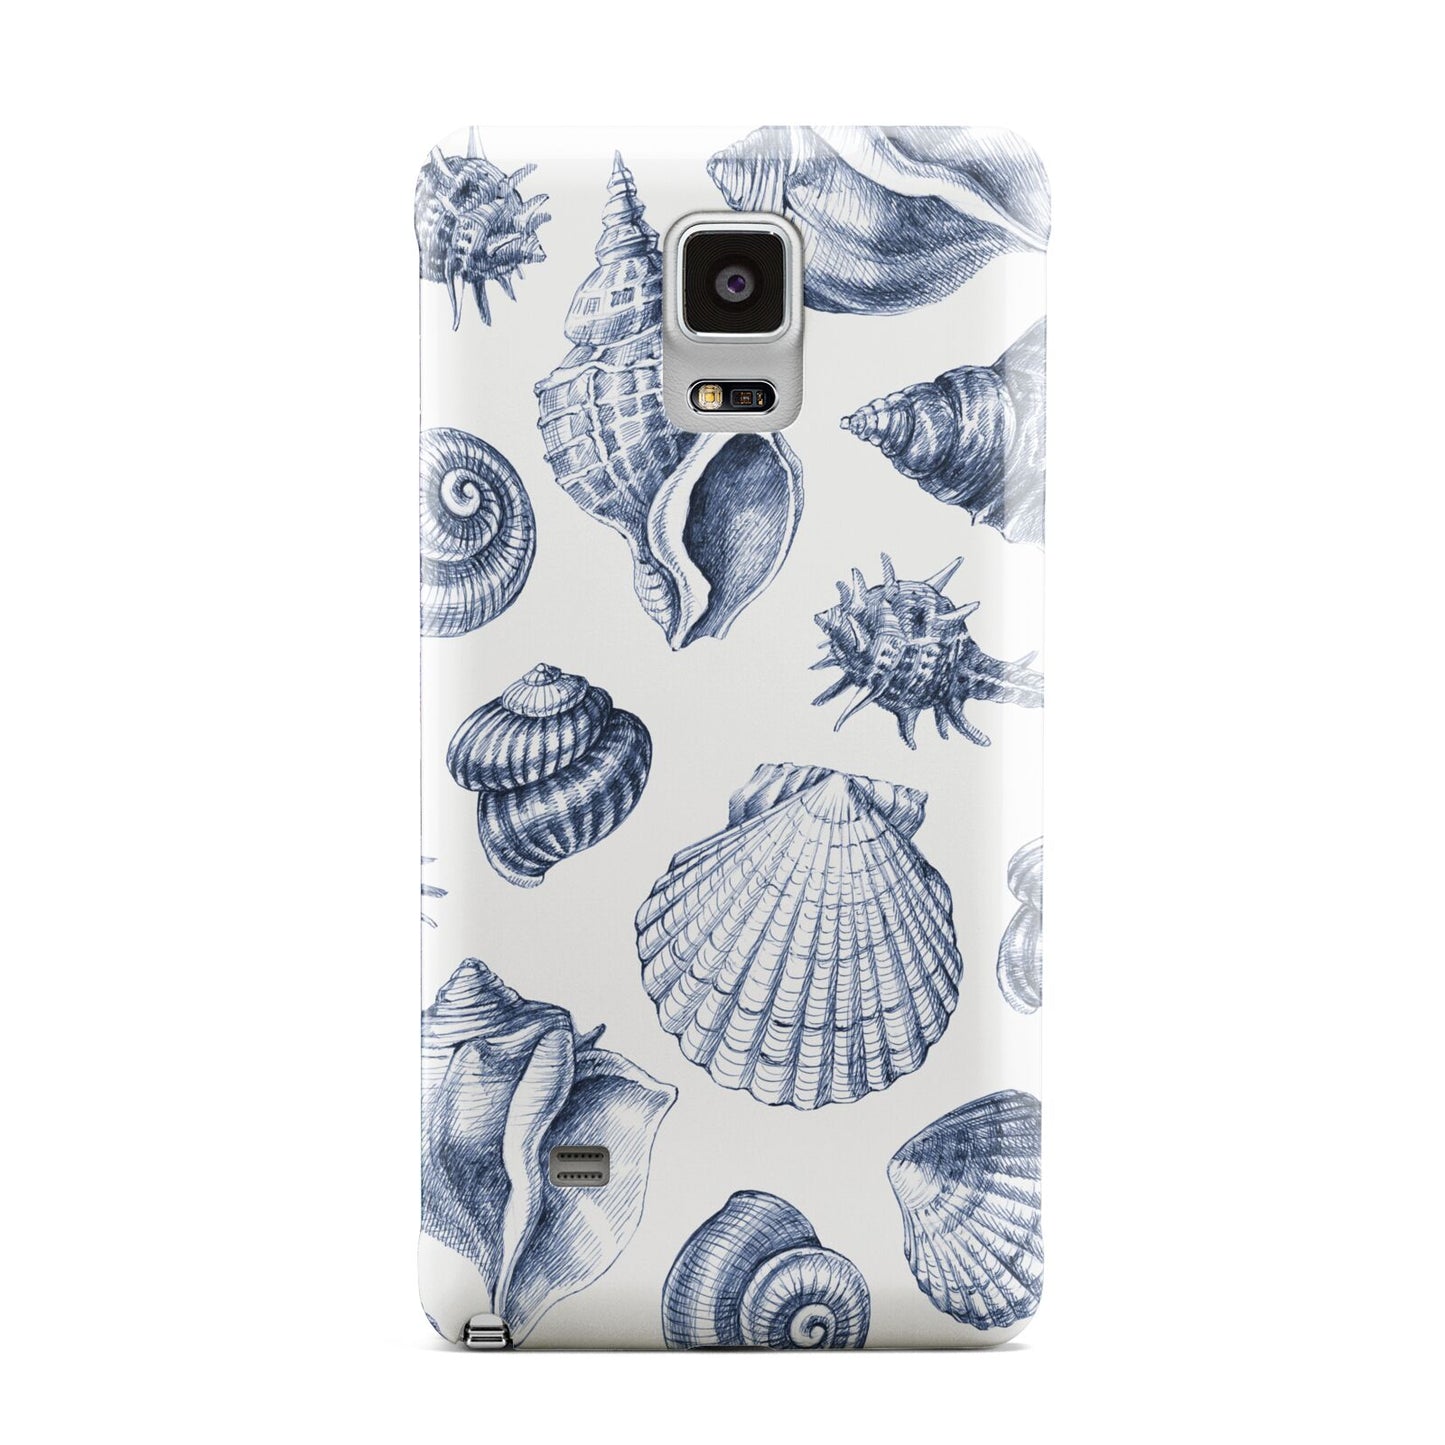 Shell Samsung Galaxy Note 4 Case